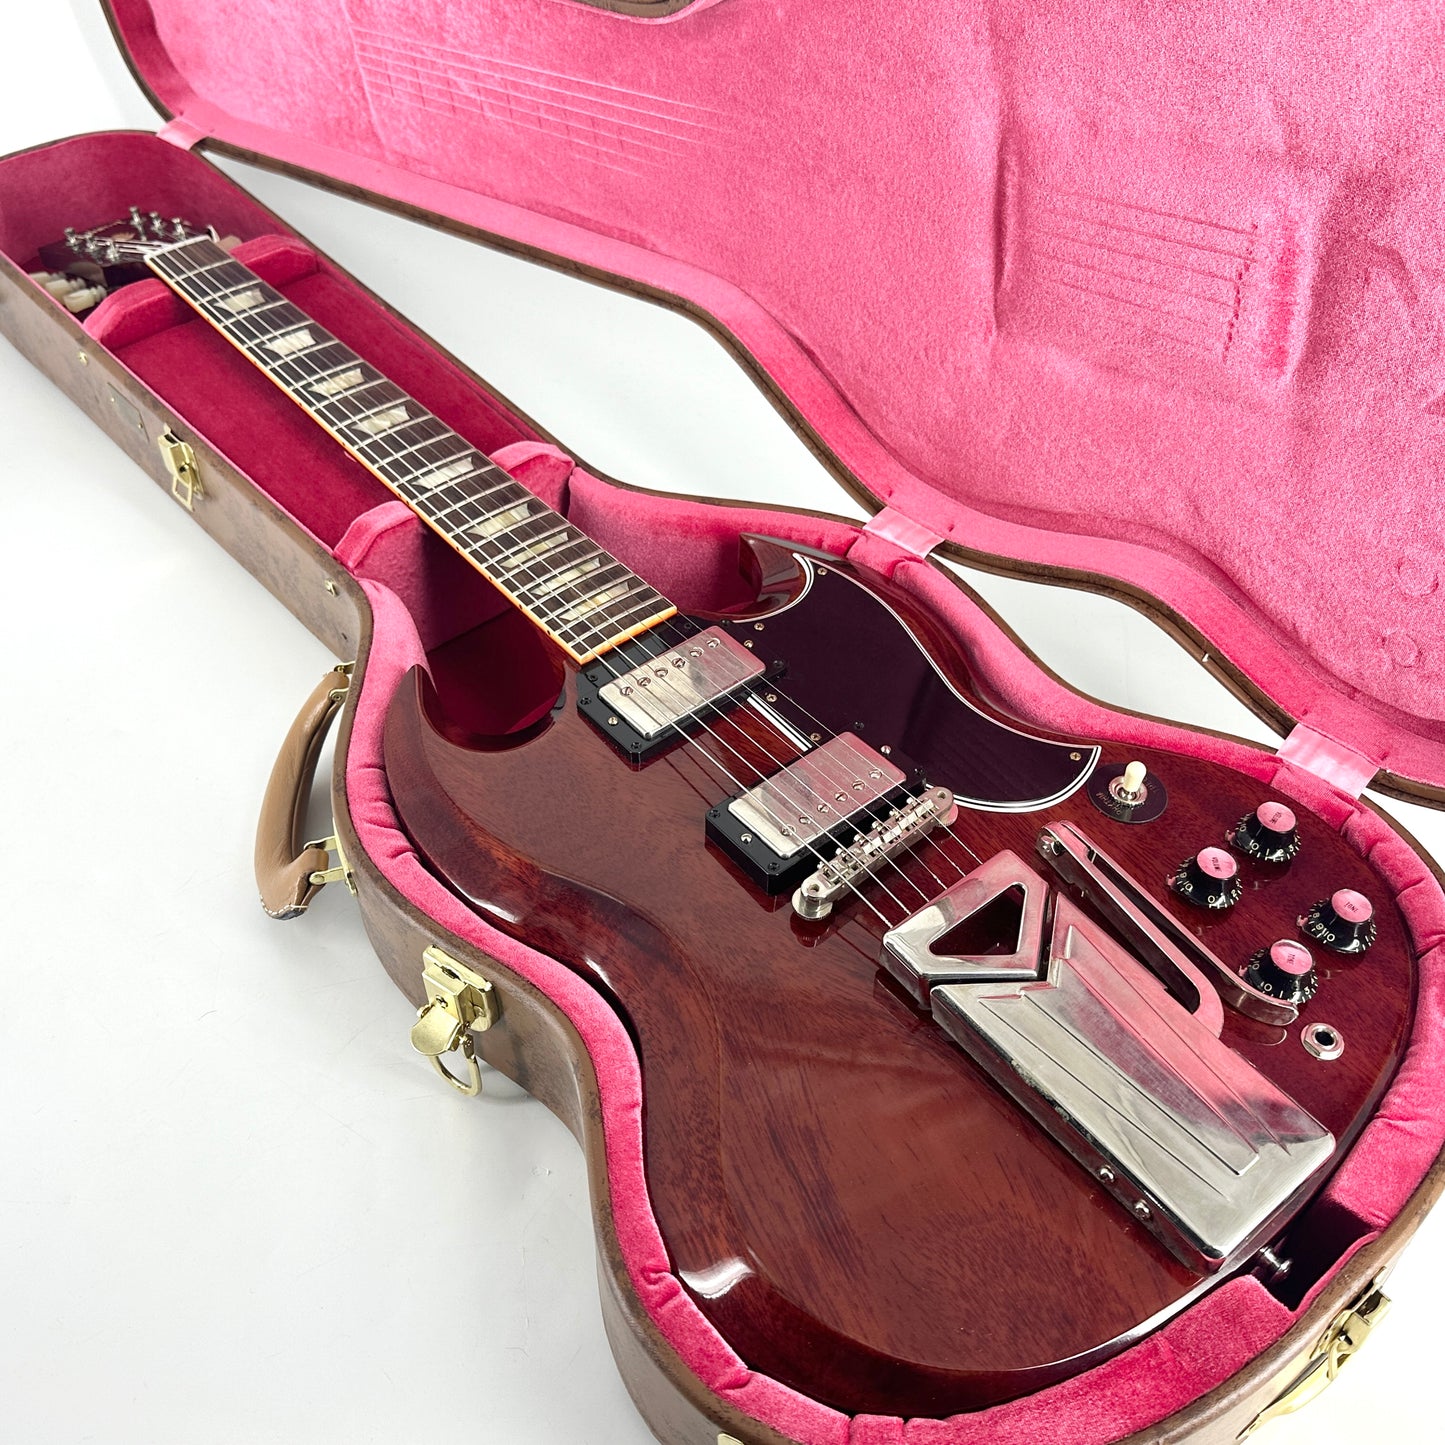 2021 Gibson Custom Shop 60th Anniversary 1961 Les Paul SG Standard w/ Sideways Vibrola - Cherry VOS